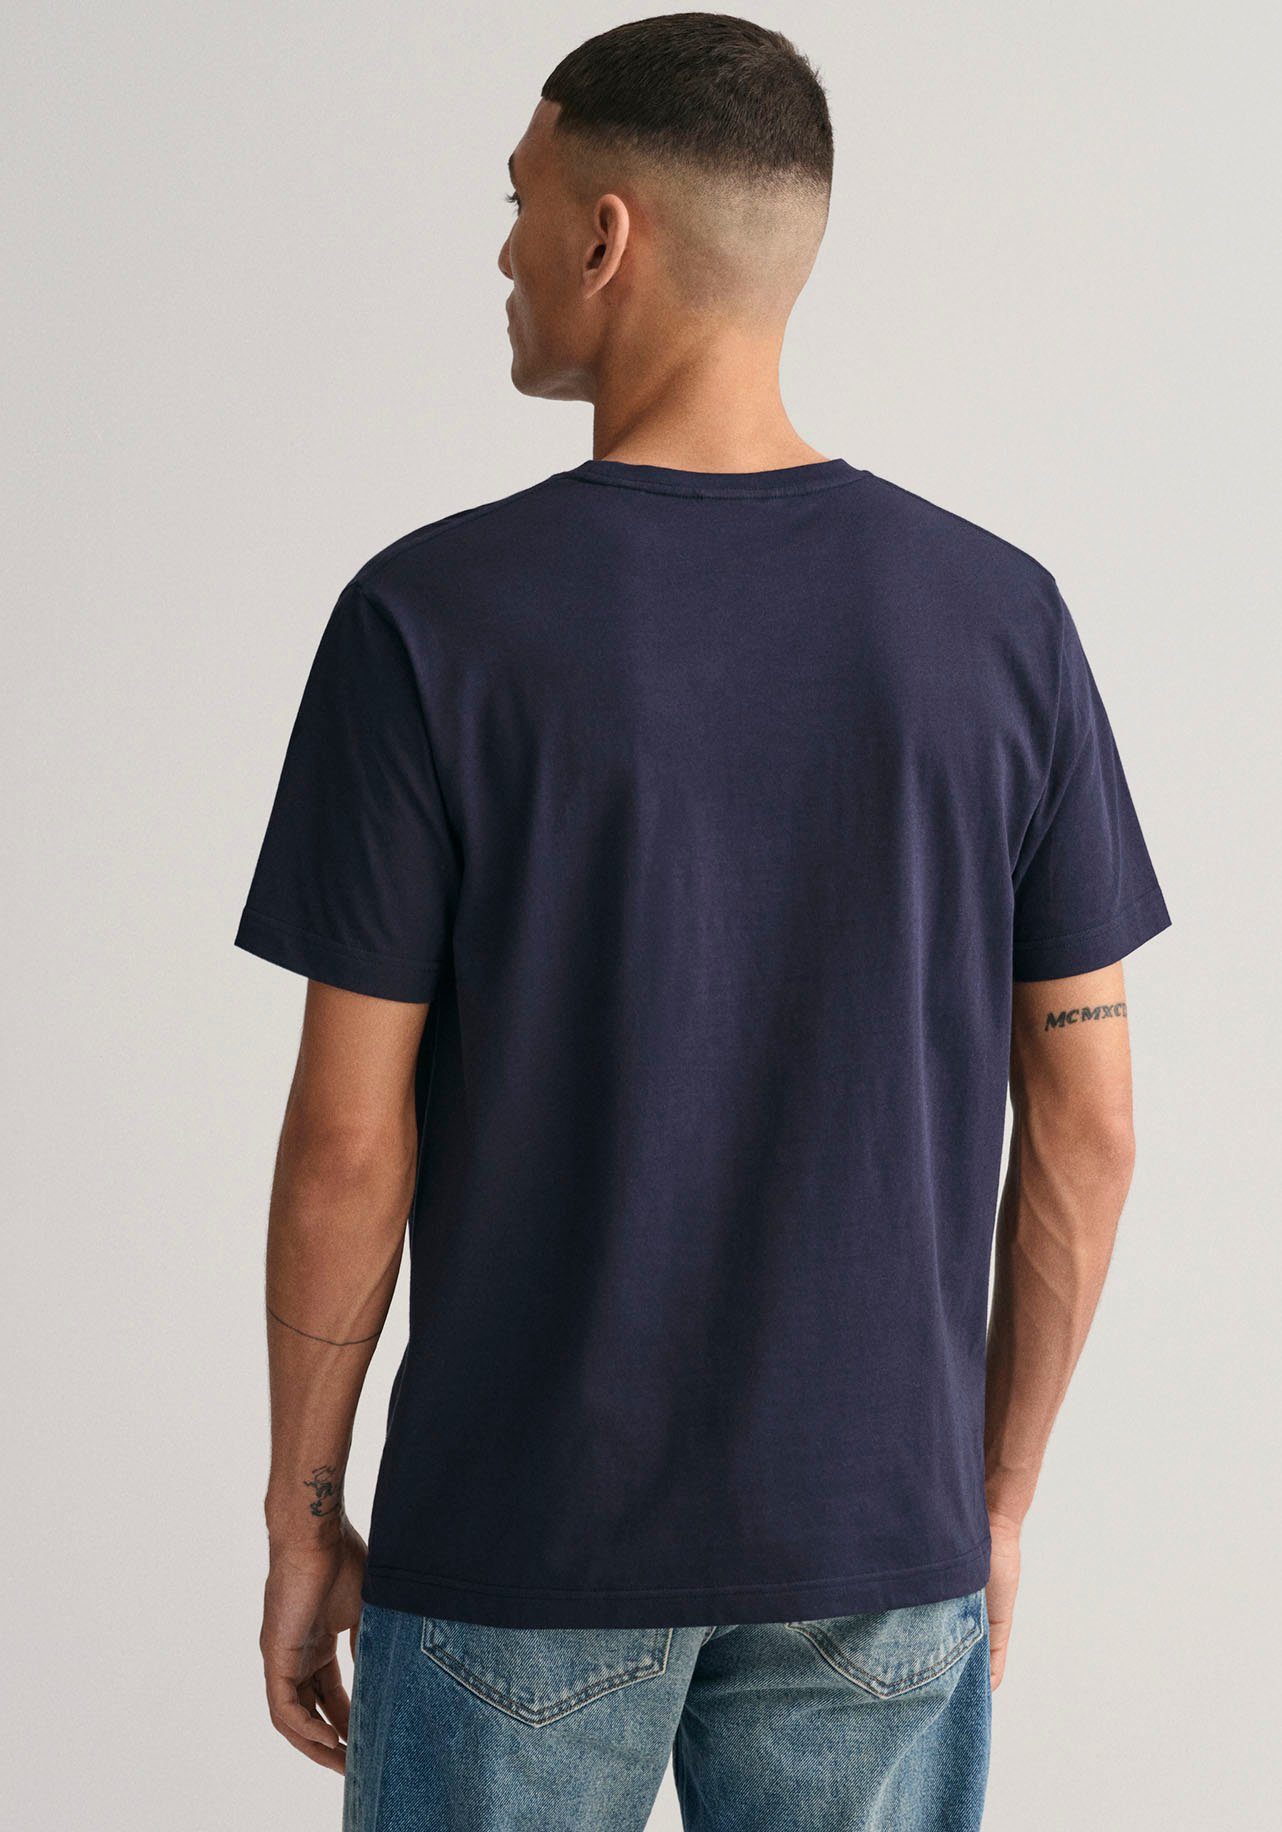 Gant T-Shirt REG 1980er-Jahren evening Archiv den aus inspiriert blue von T-SHIRT EMB dem SS ARCHIVE SHIELD